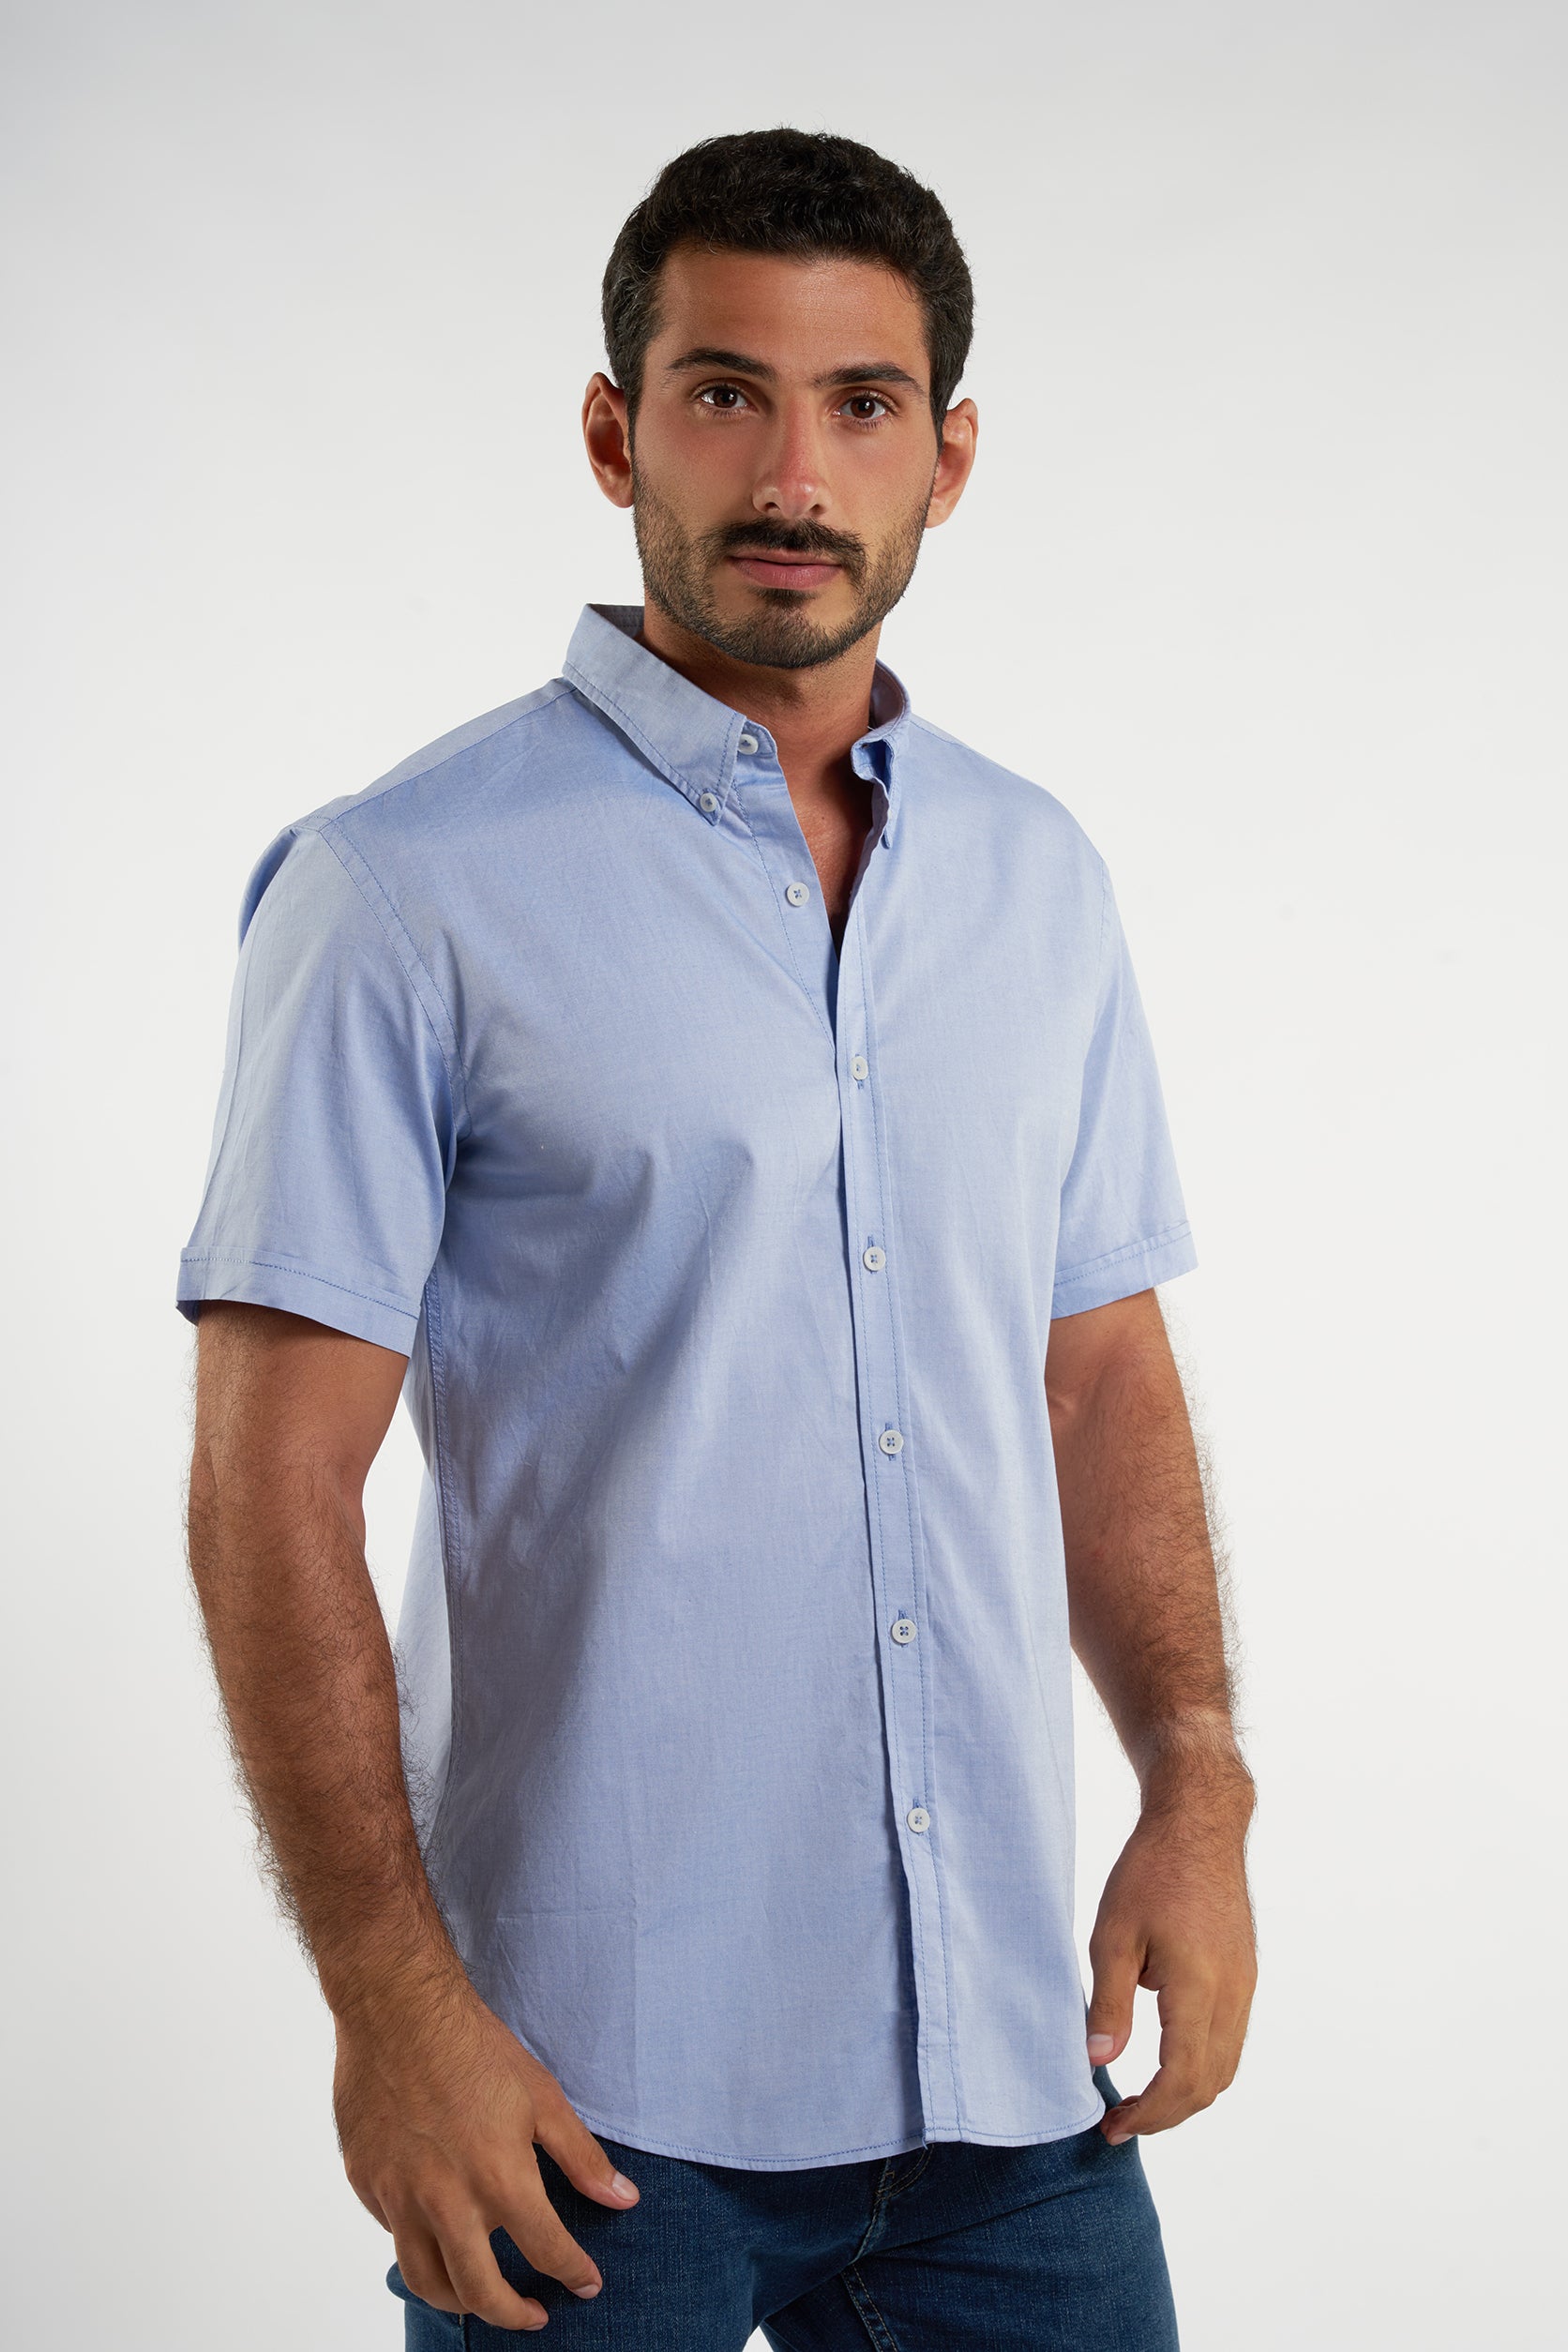 Plain Light Blue Cotton shirt(619-620)